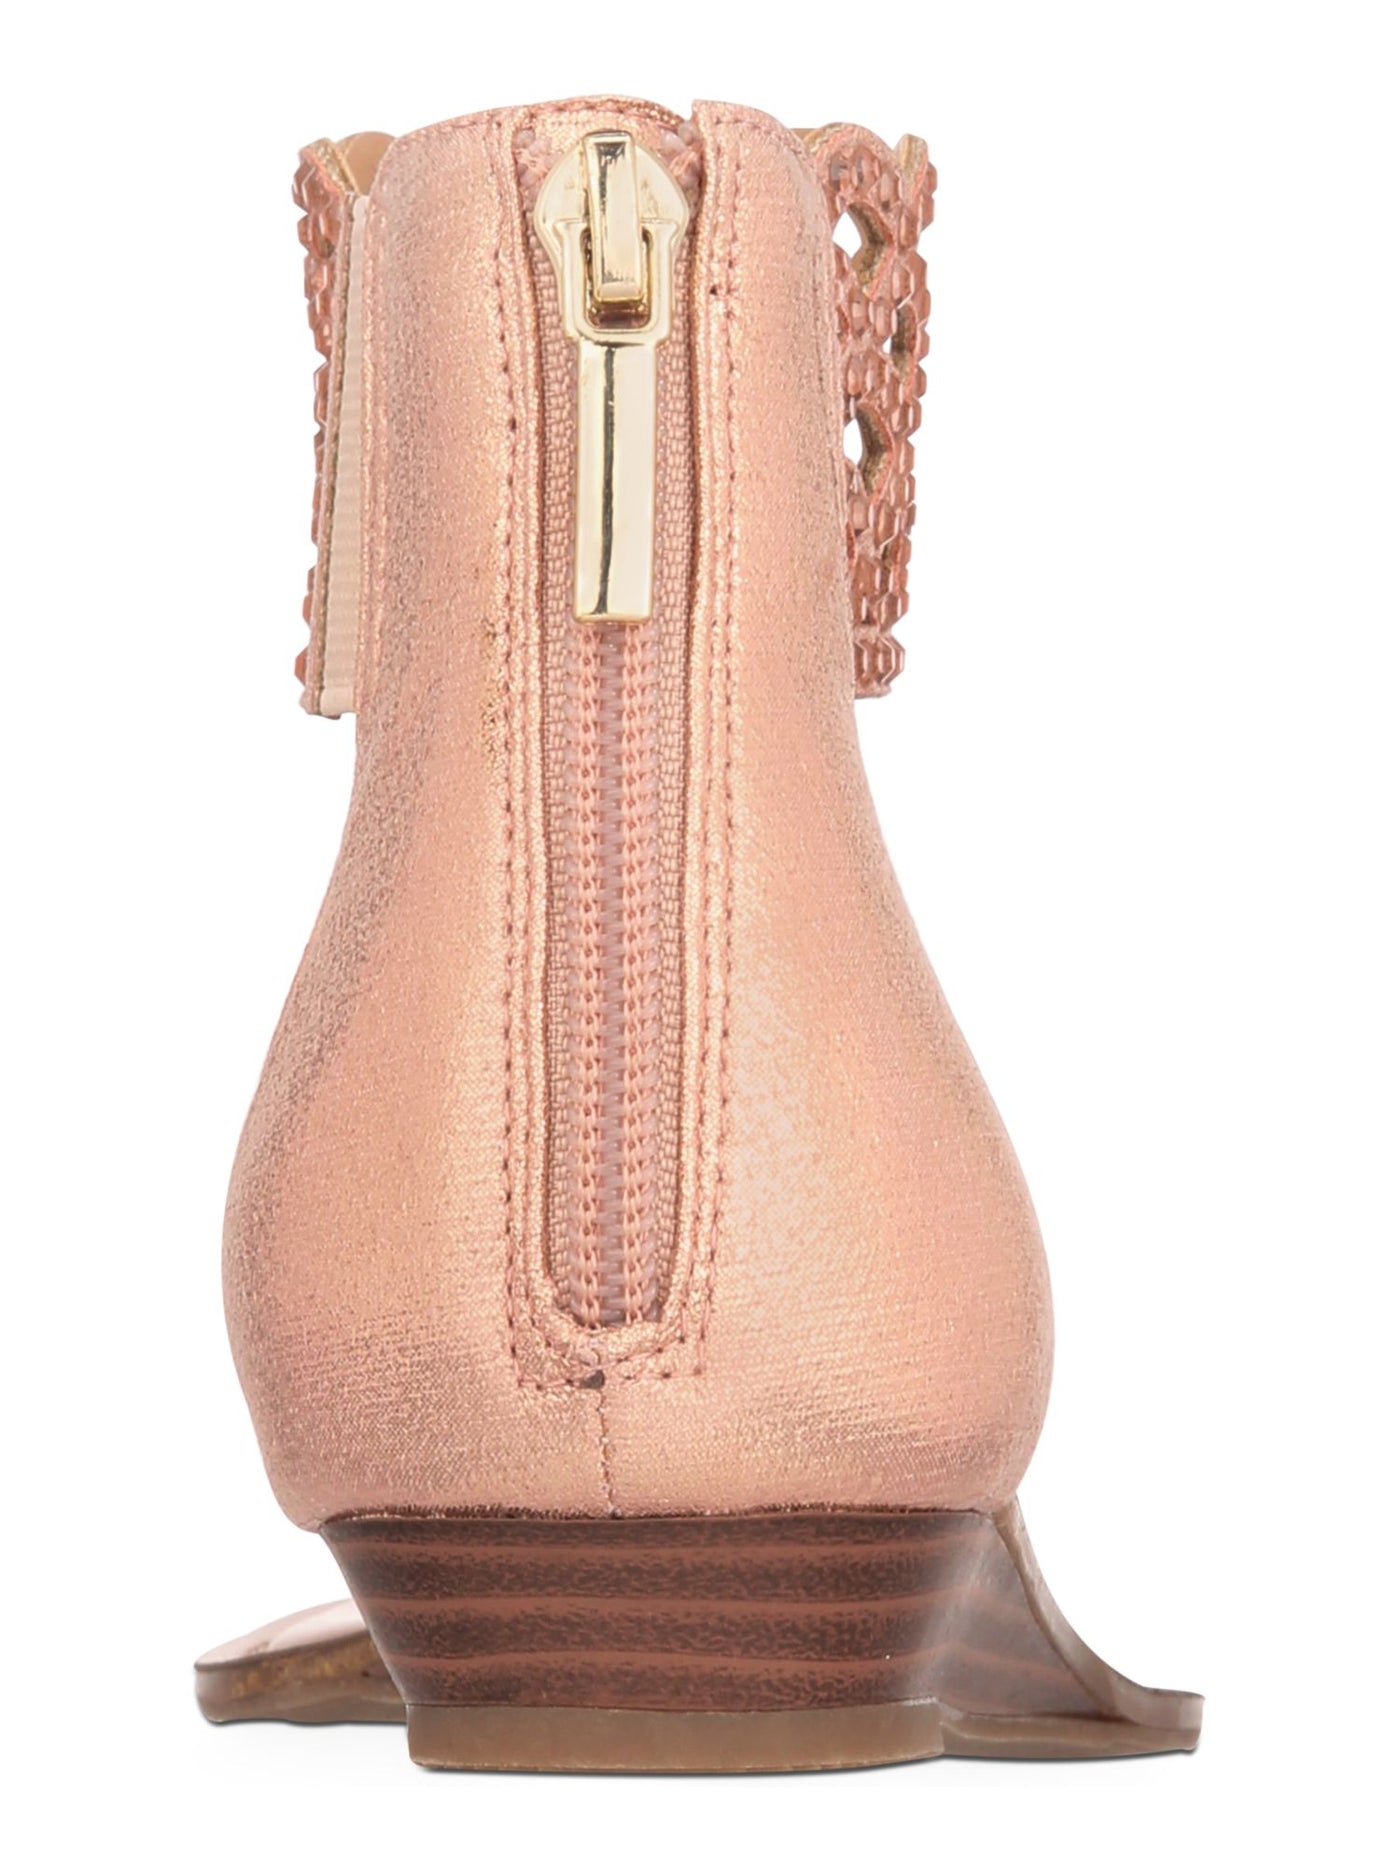 THALIA SODI Womens Pink Multi Patterned Cutouts Elastic Goring Rhinestone Comfort Ilene Round Toe Wedge Zip-Up Thong Sandals Shoes 6.5 M